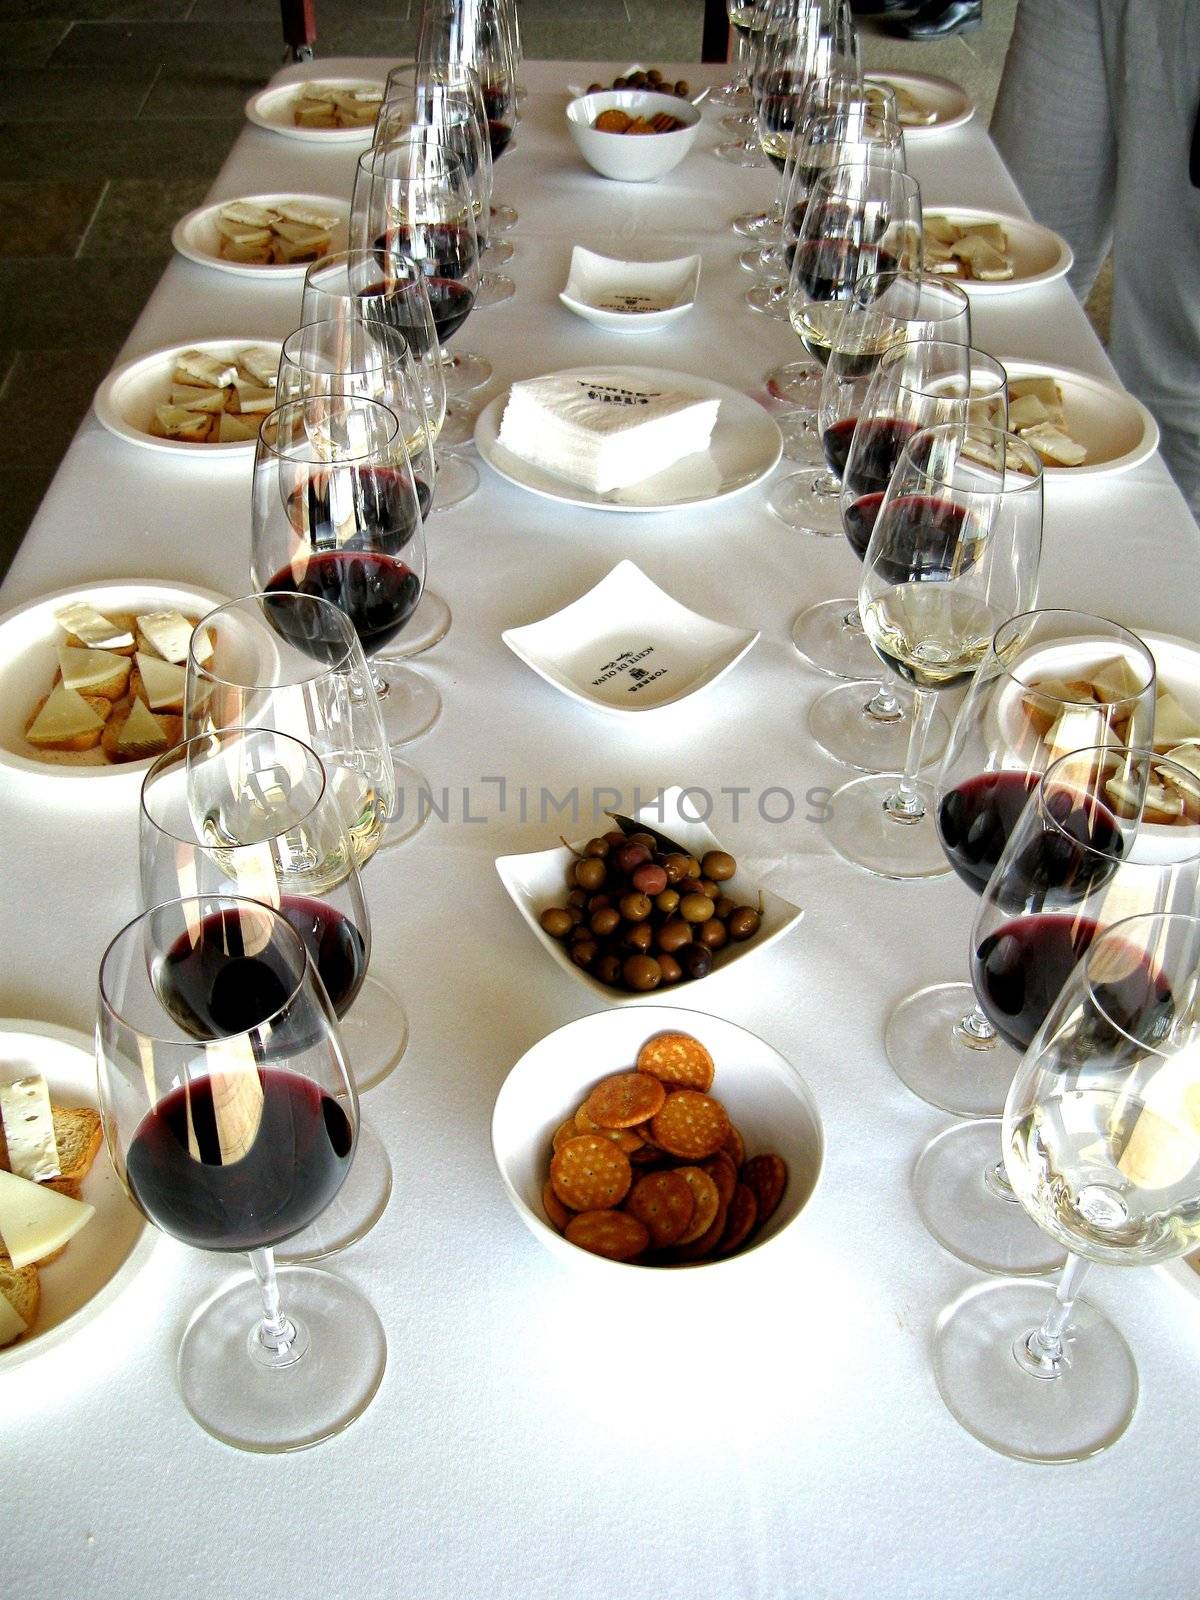 Table set up for proper wine tasting event